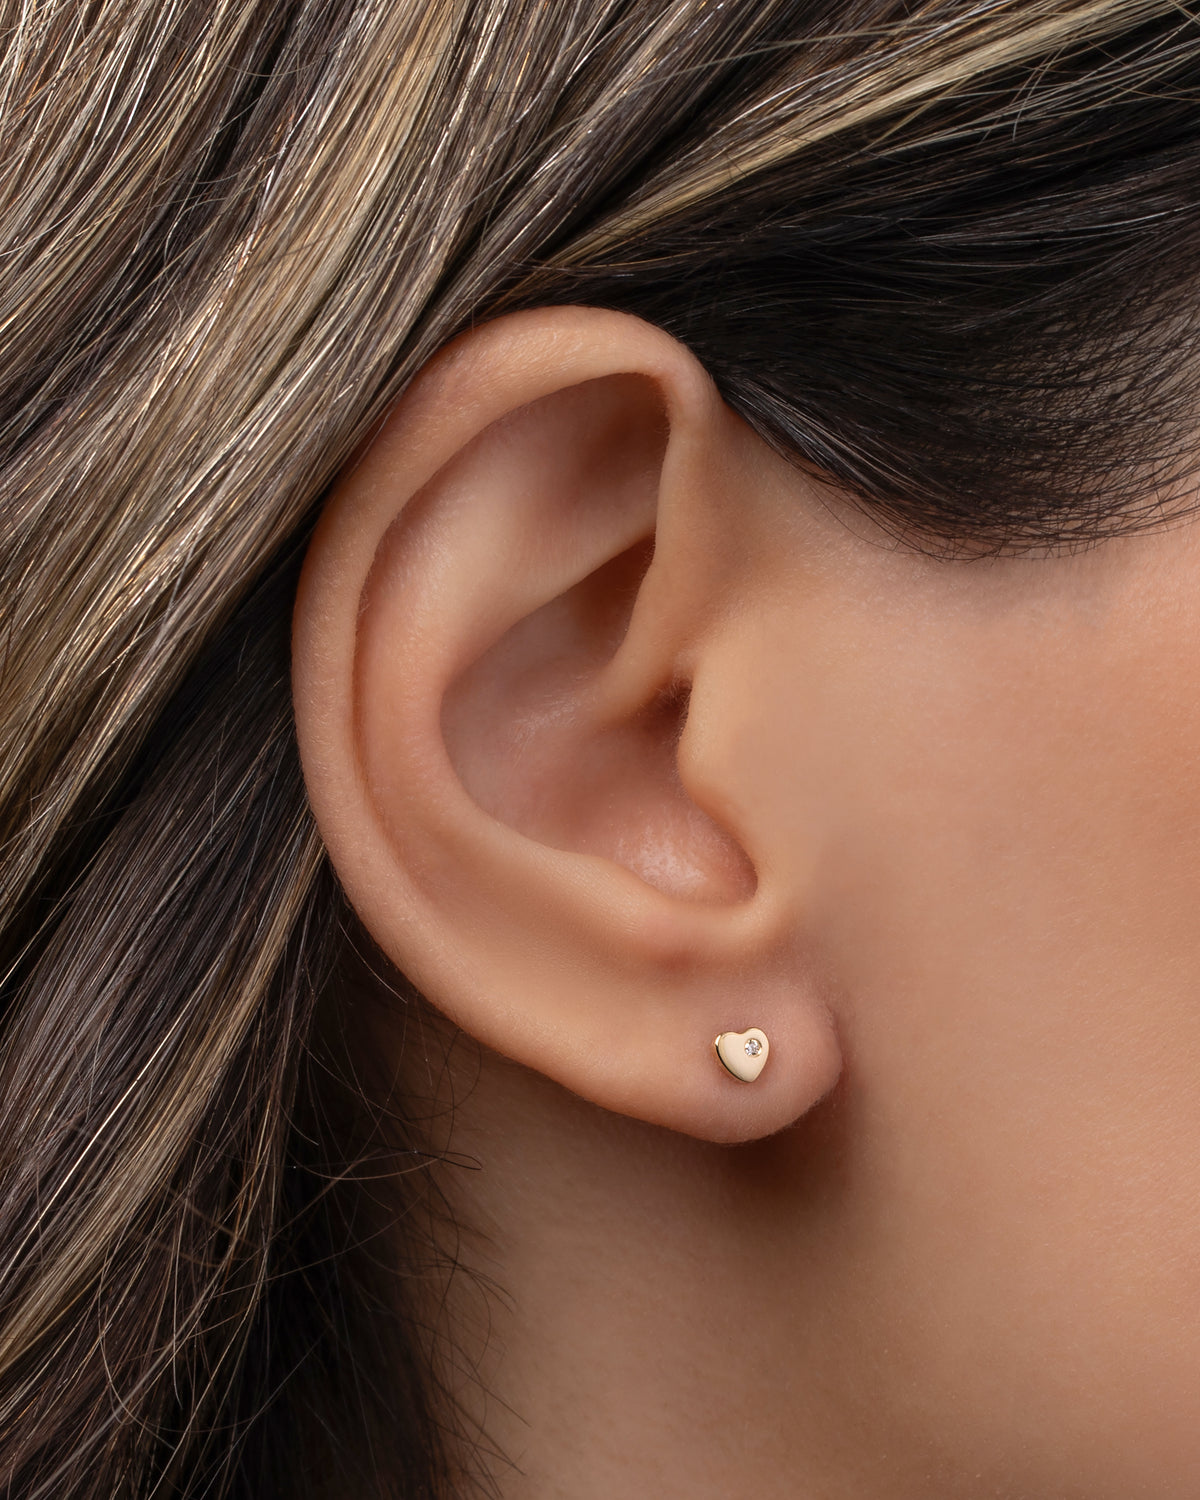 14k Gold Tiny Heart with Diamond Stud Earring